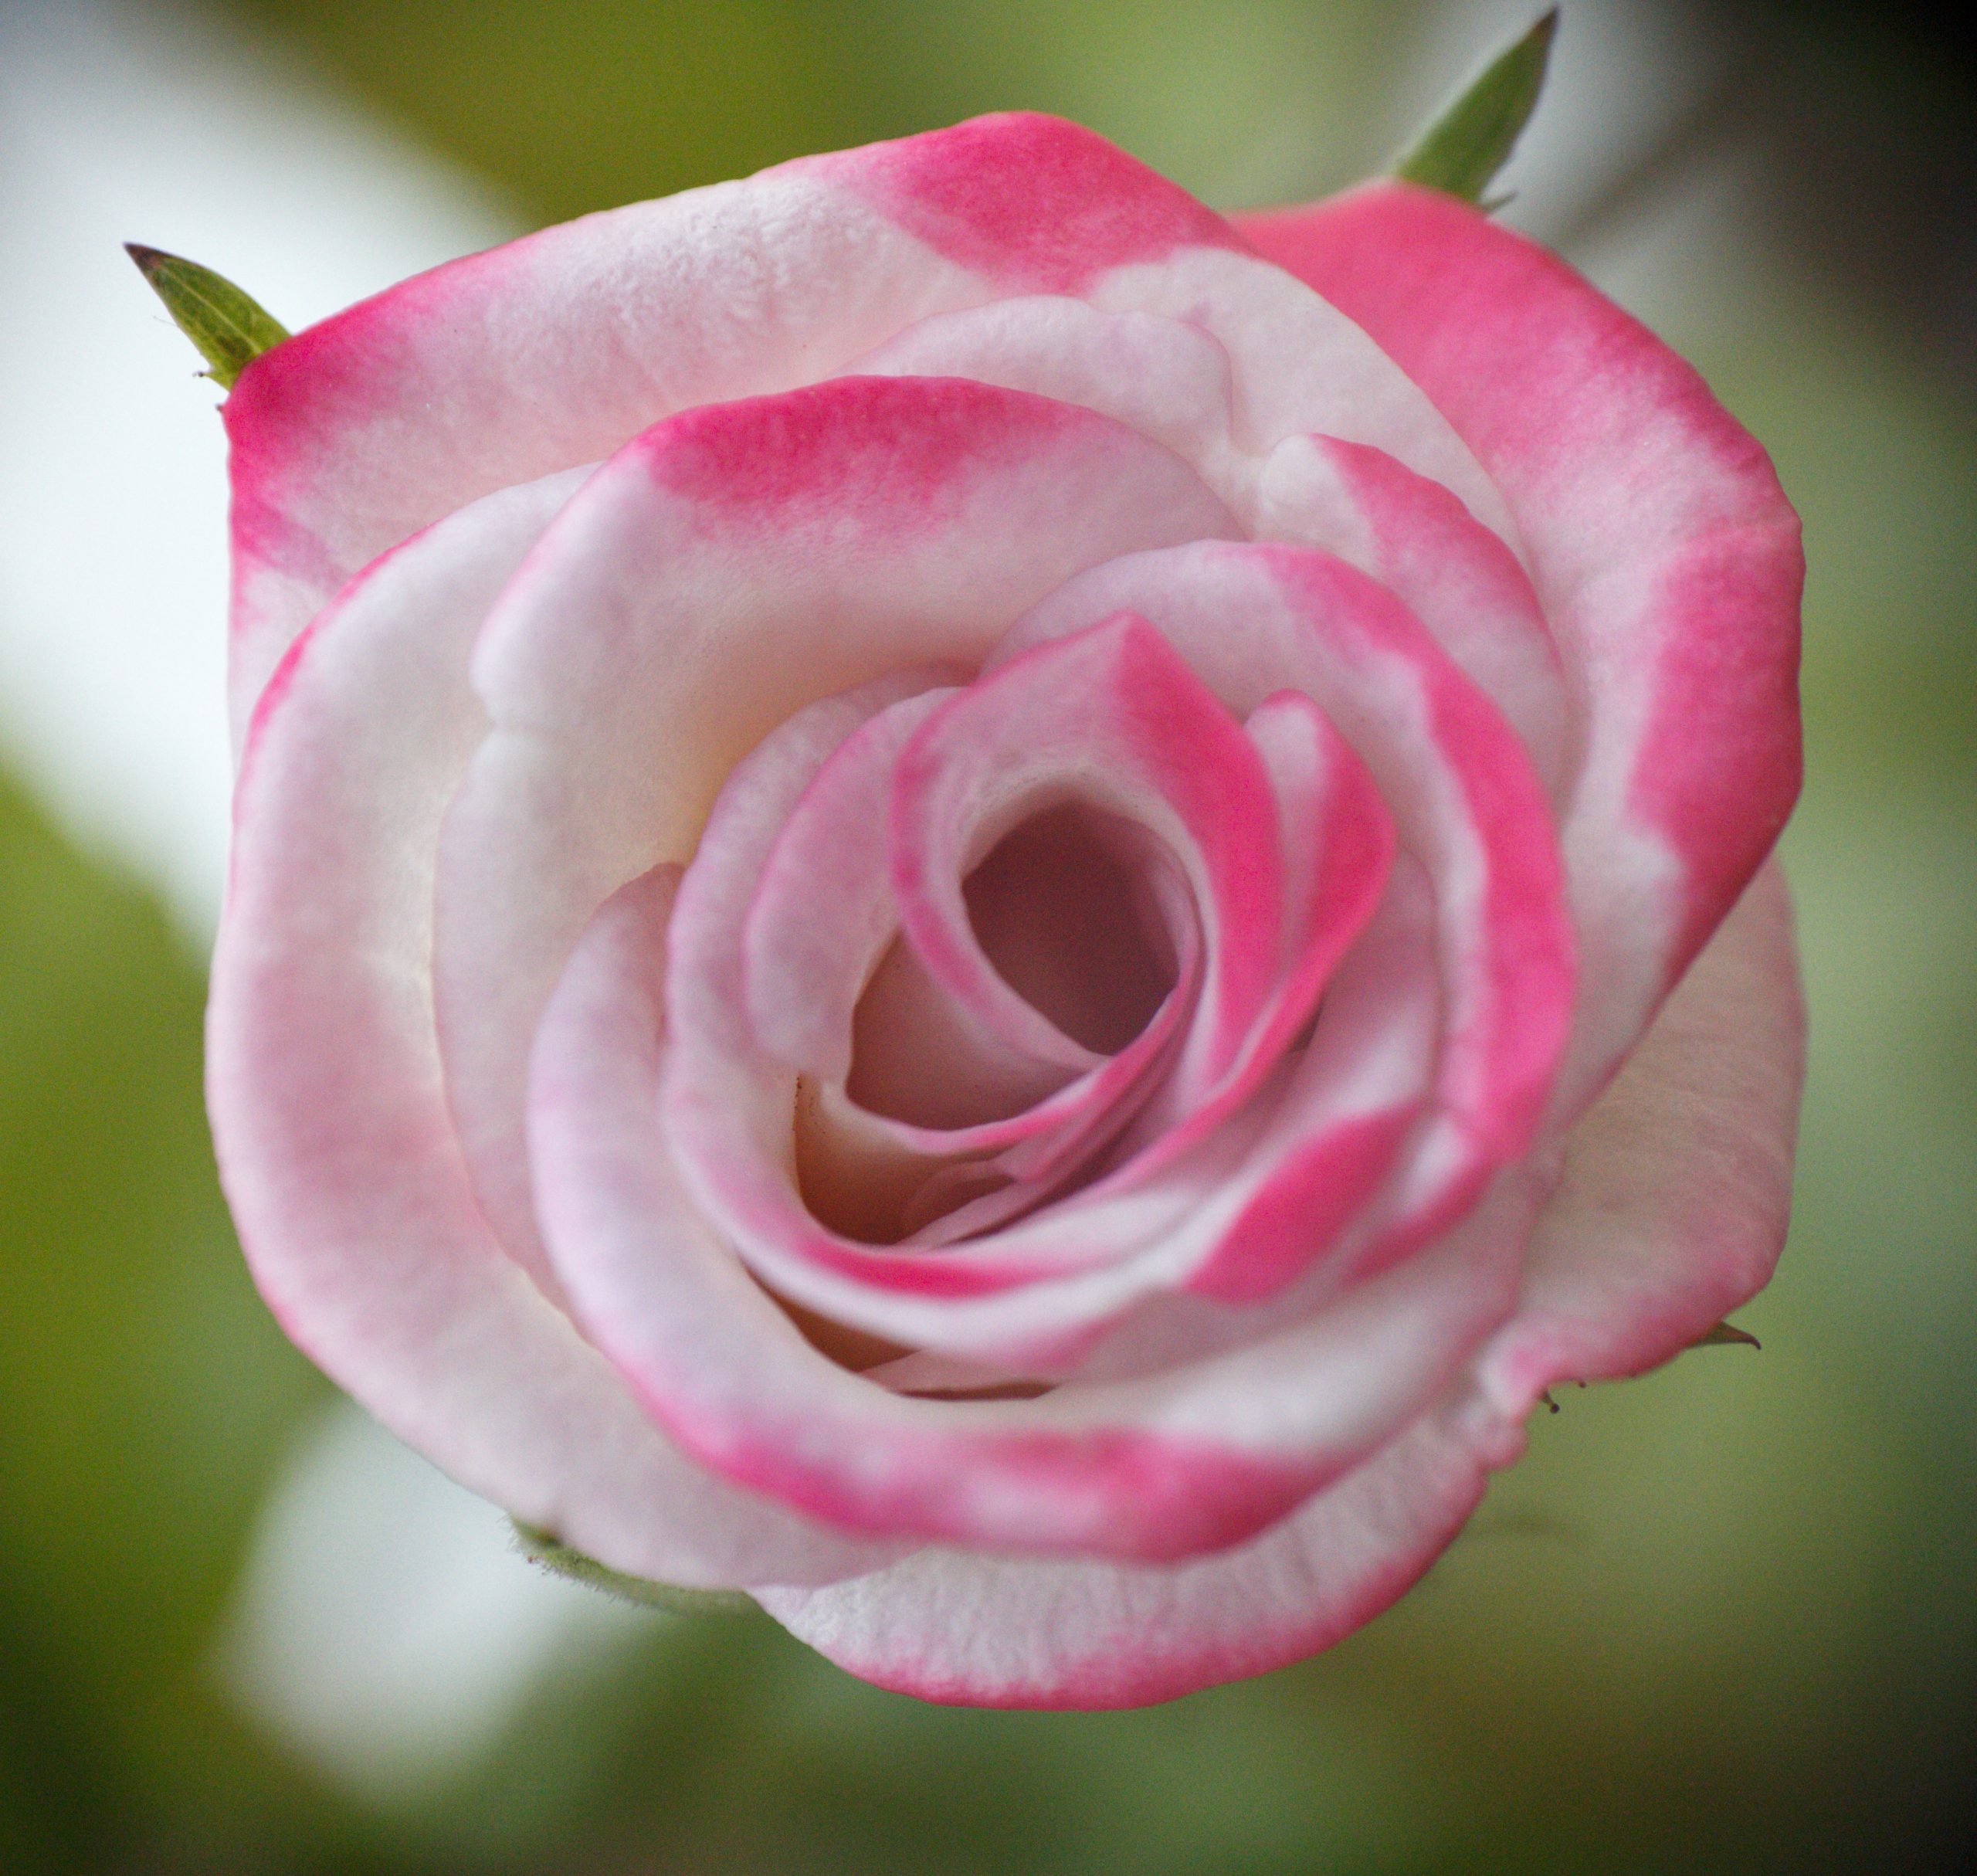 Pinkish Rose flower on focus